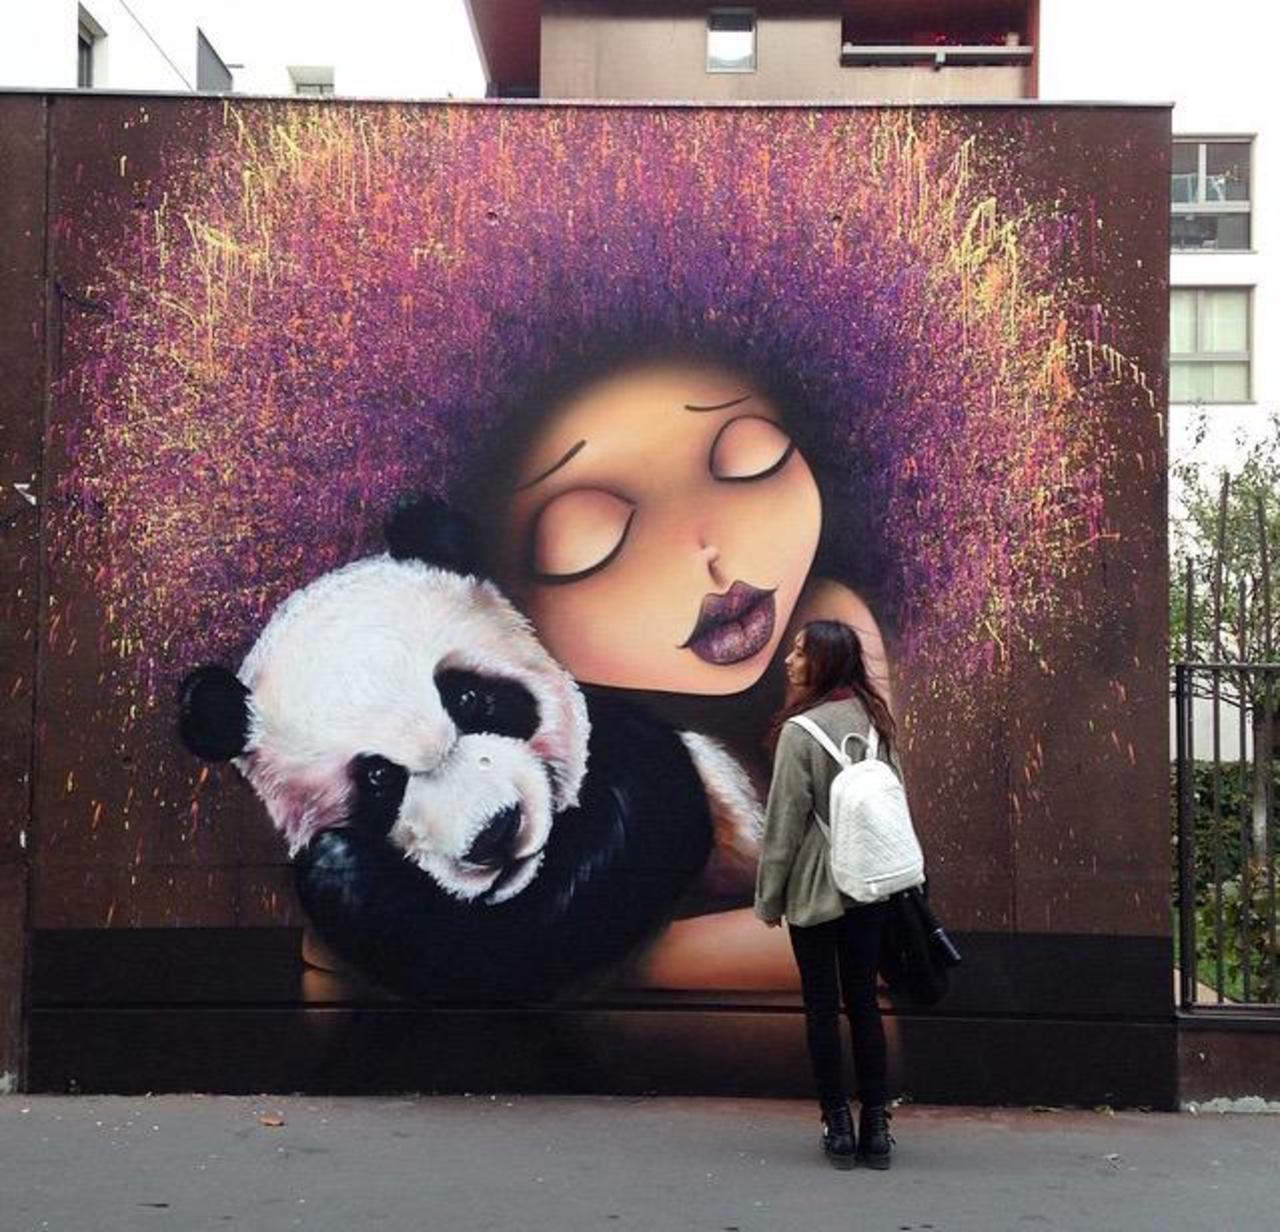 Street Art by VinieGraffiti in Paris 

#art #graffiti #mural #streetart http://t.co/wscqUqron9